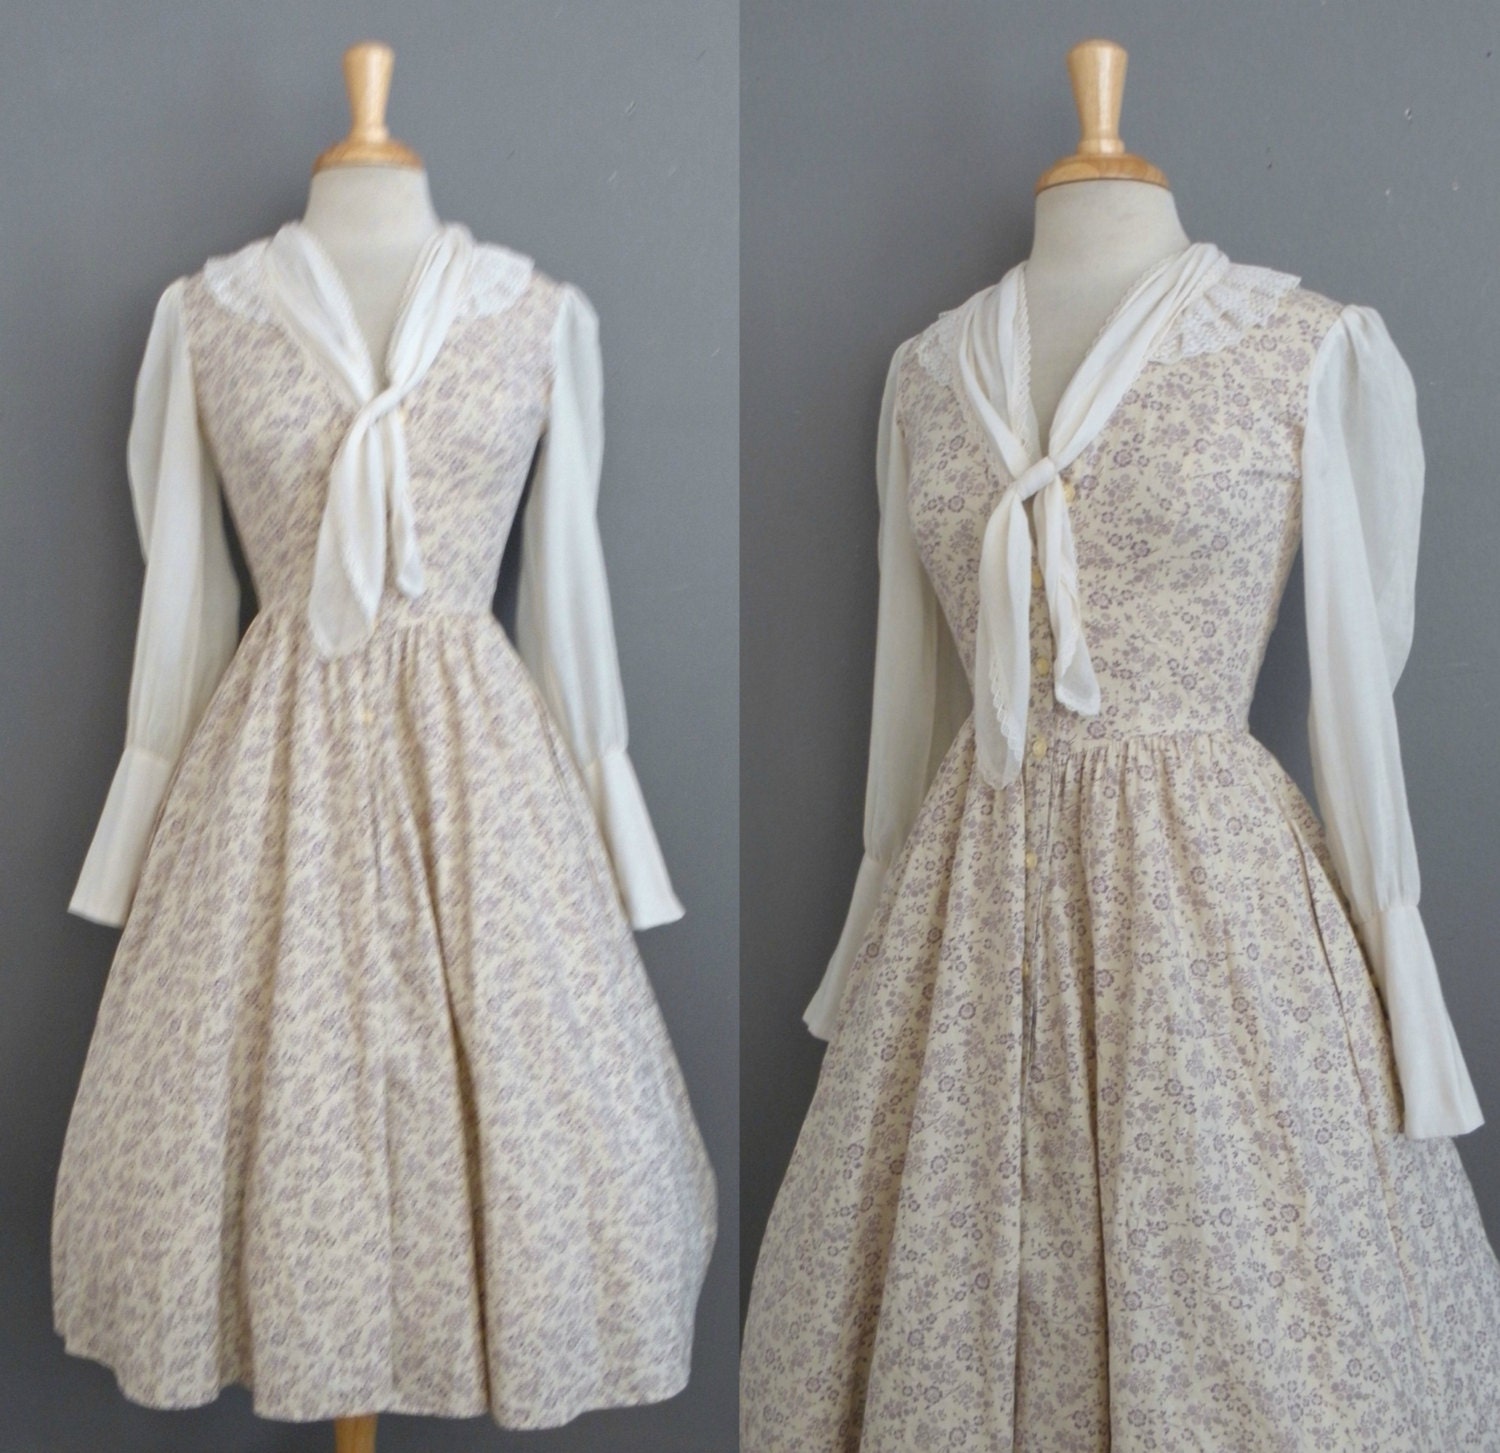 CLEARANCE SALE Vintage 70s Dress / JC Penney Calico Cotton